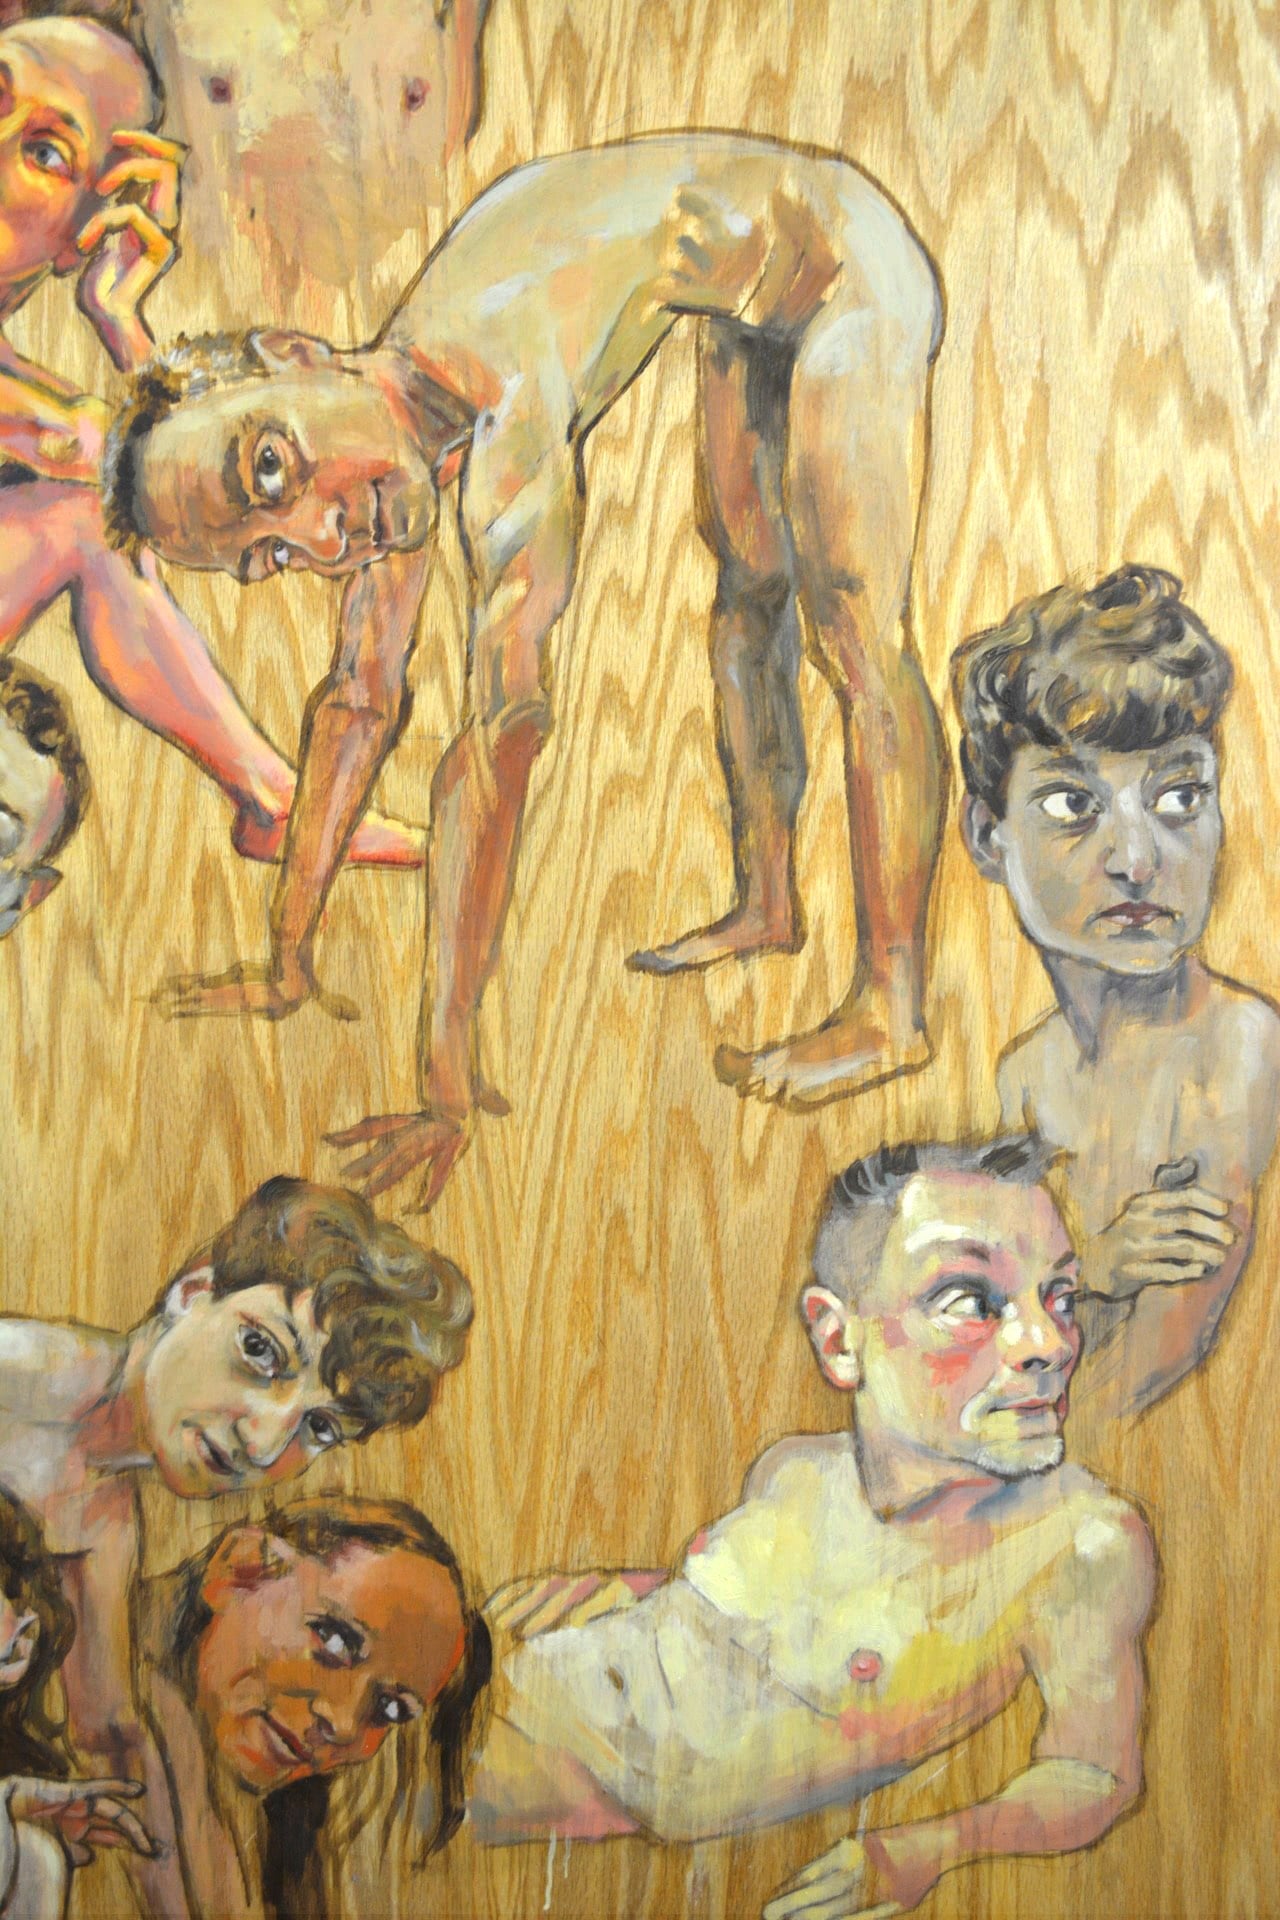 detail of "Seventeen Figures", oil on wood panel, 48" x 66", 2010.